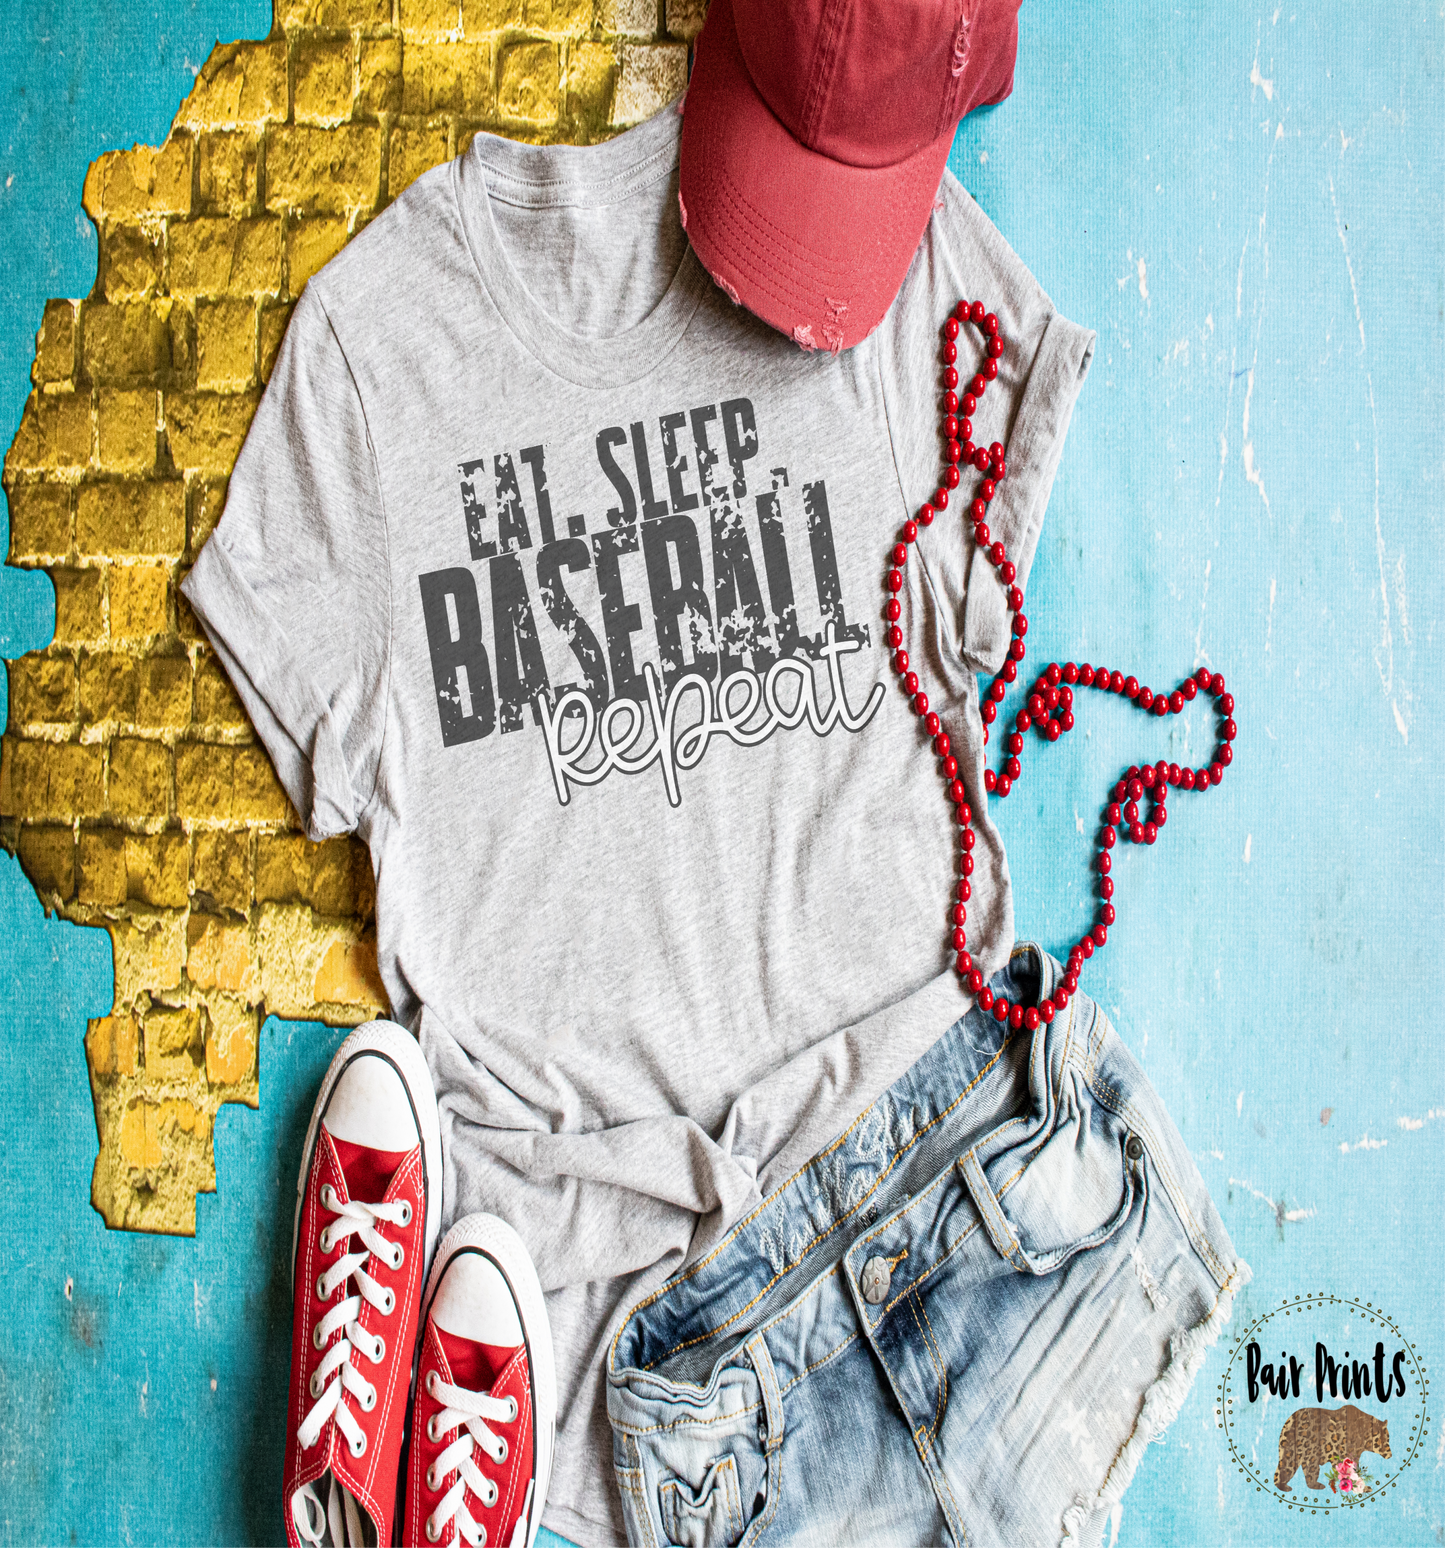 Eat Sleep Baseball Repeat Distressed Tee Shirt. Size XS-3XL Unisex - Bair Prints